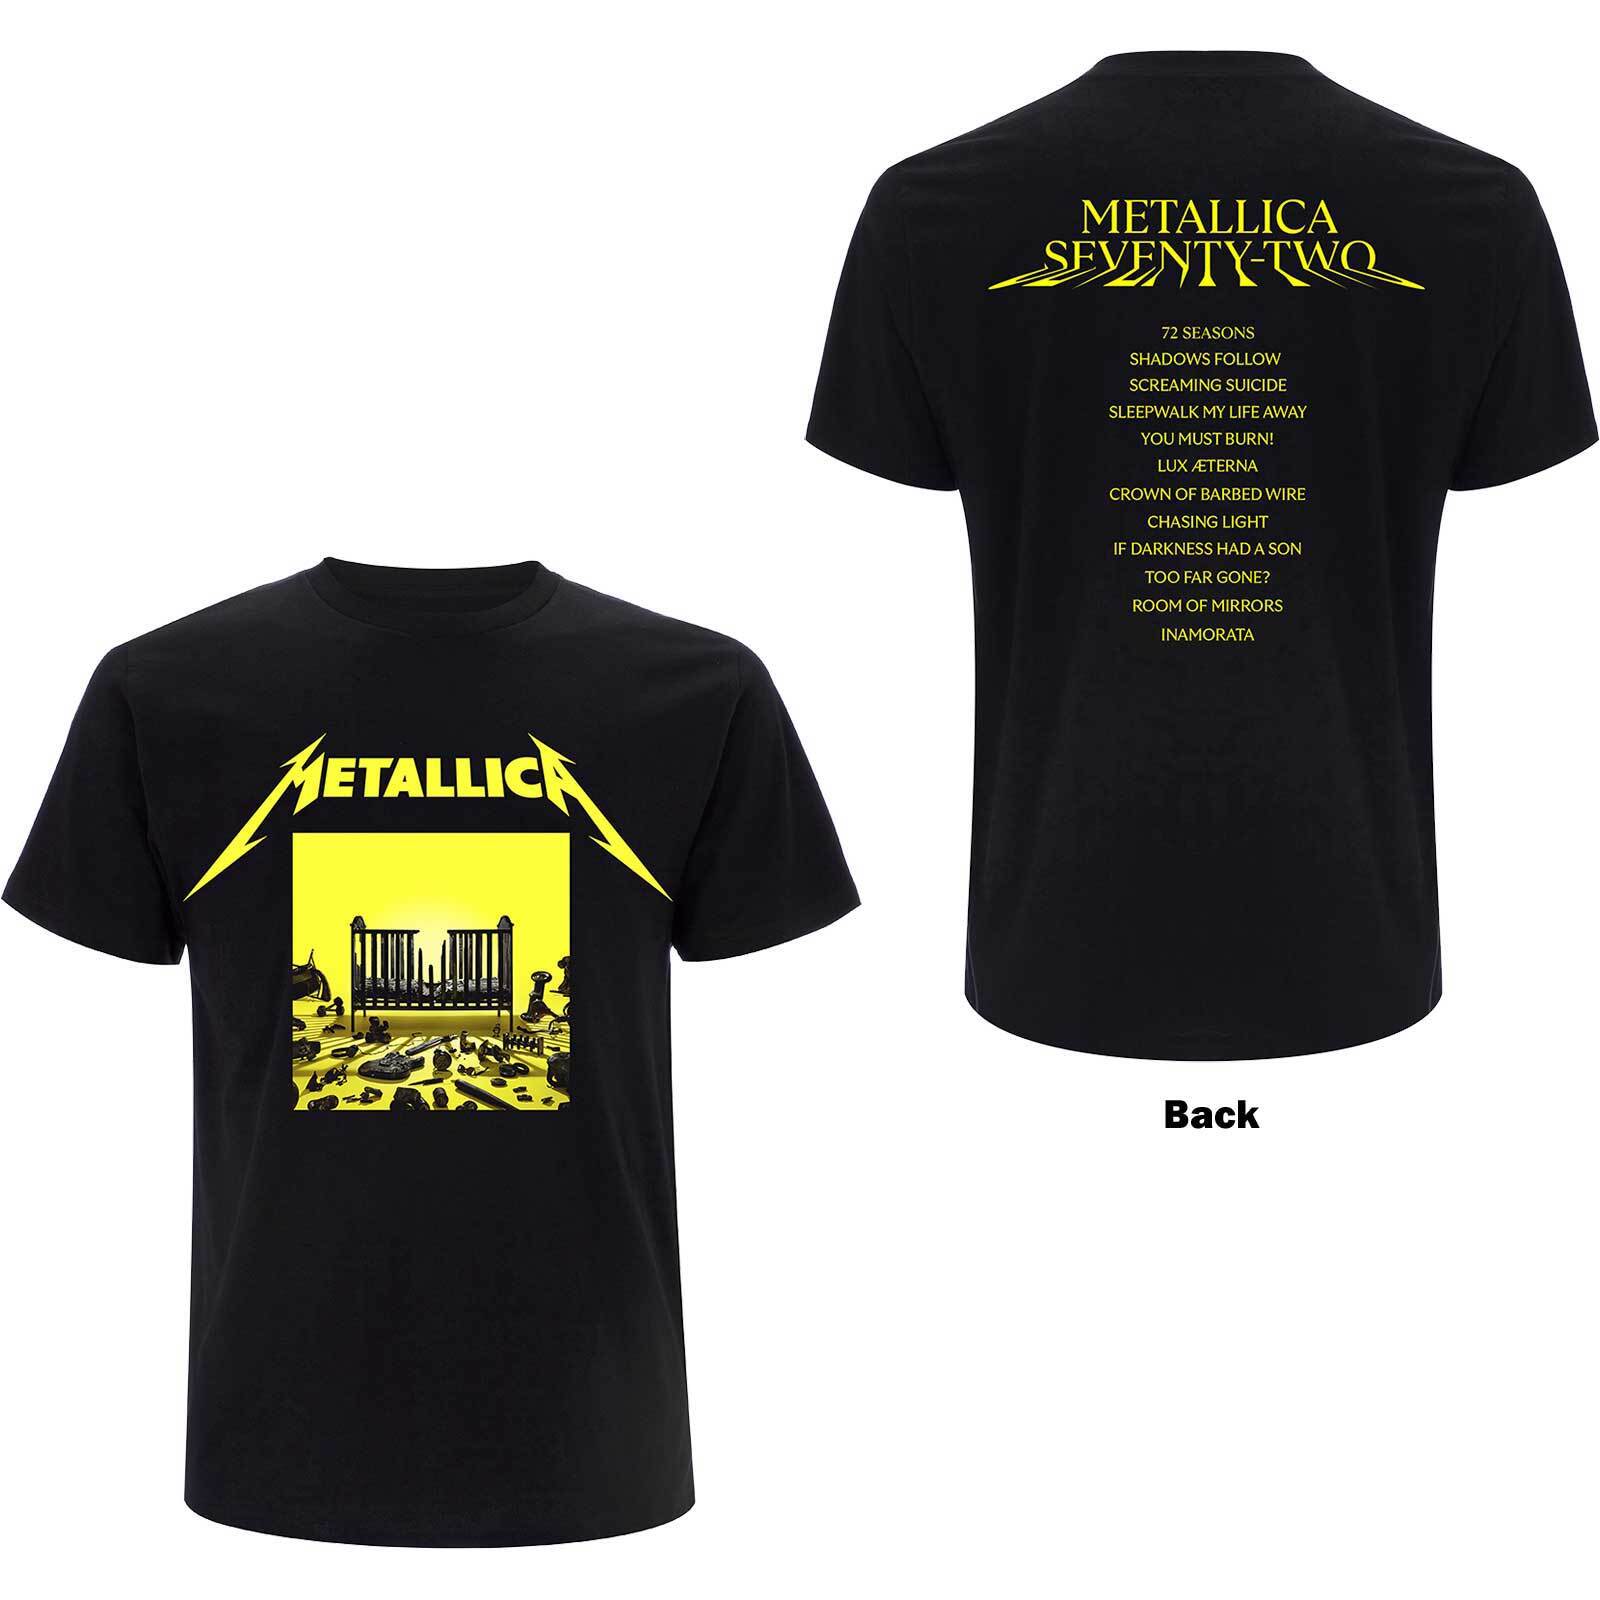 SALEM King Night Album Cover T-Shirt Black